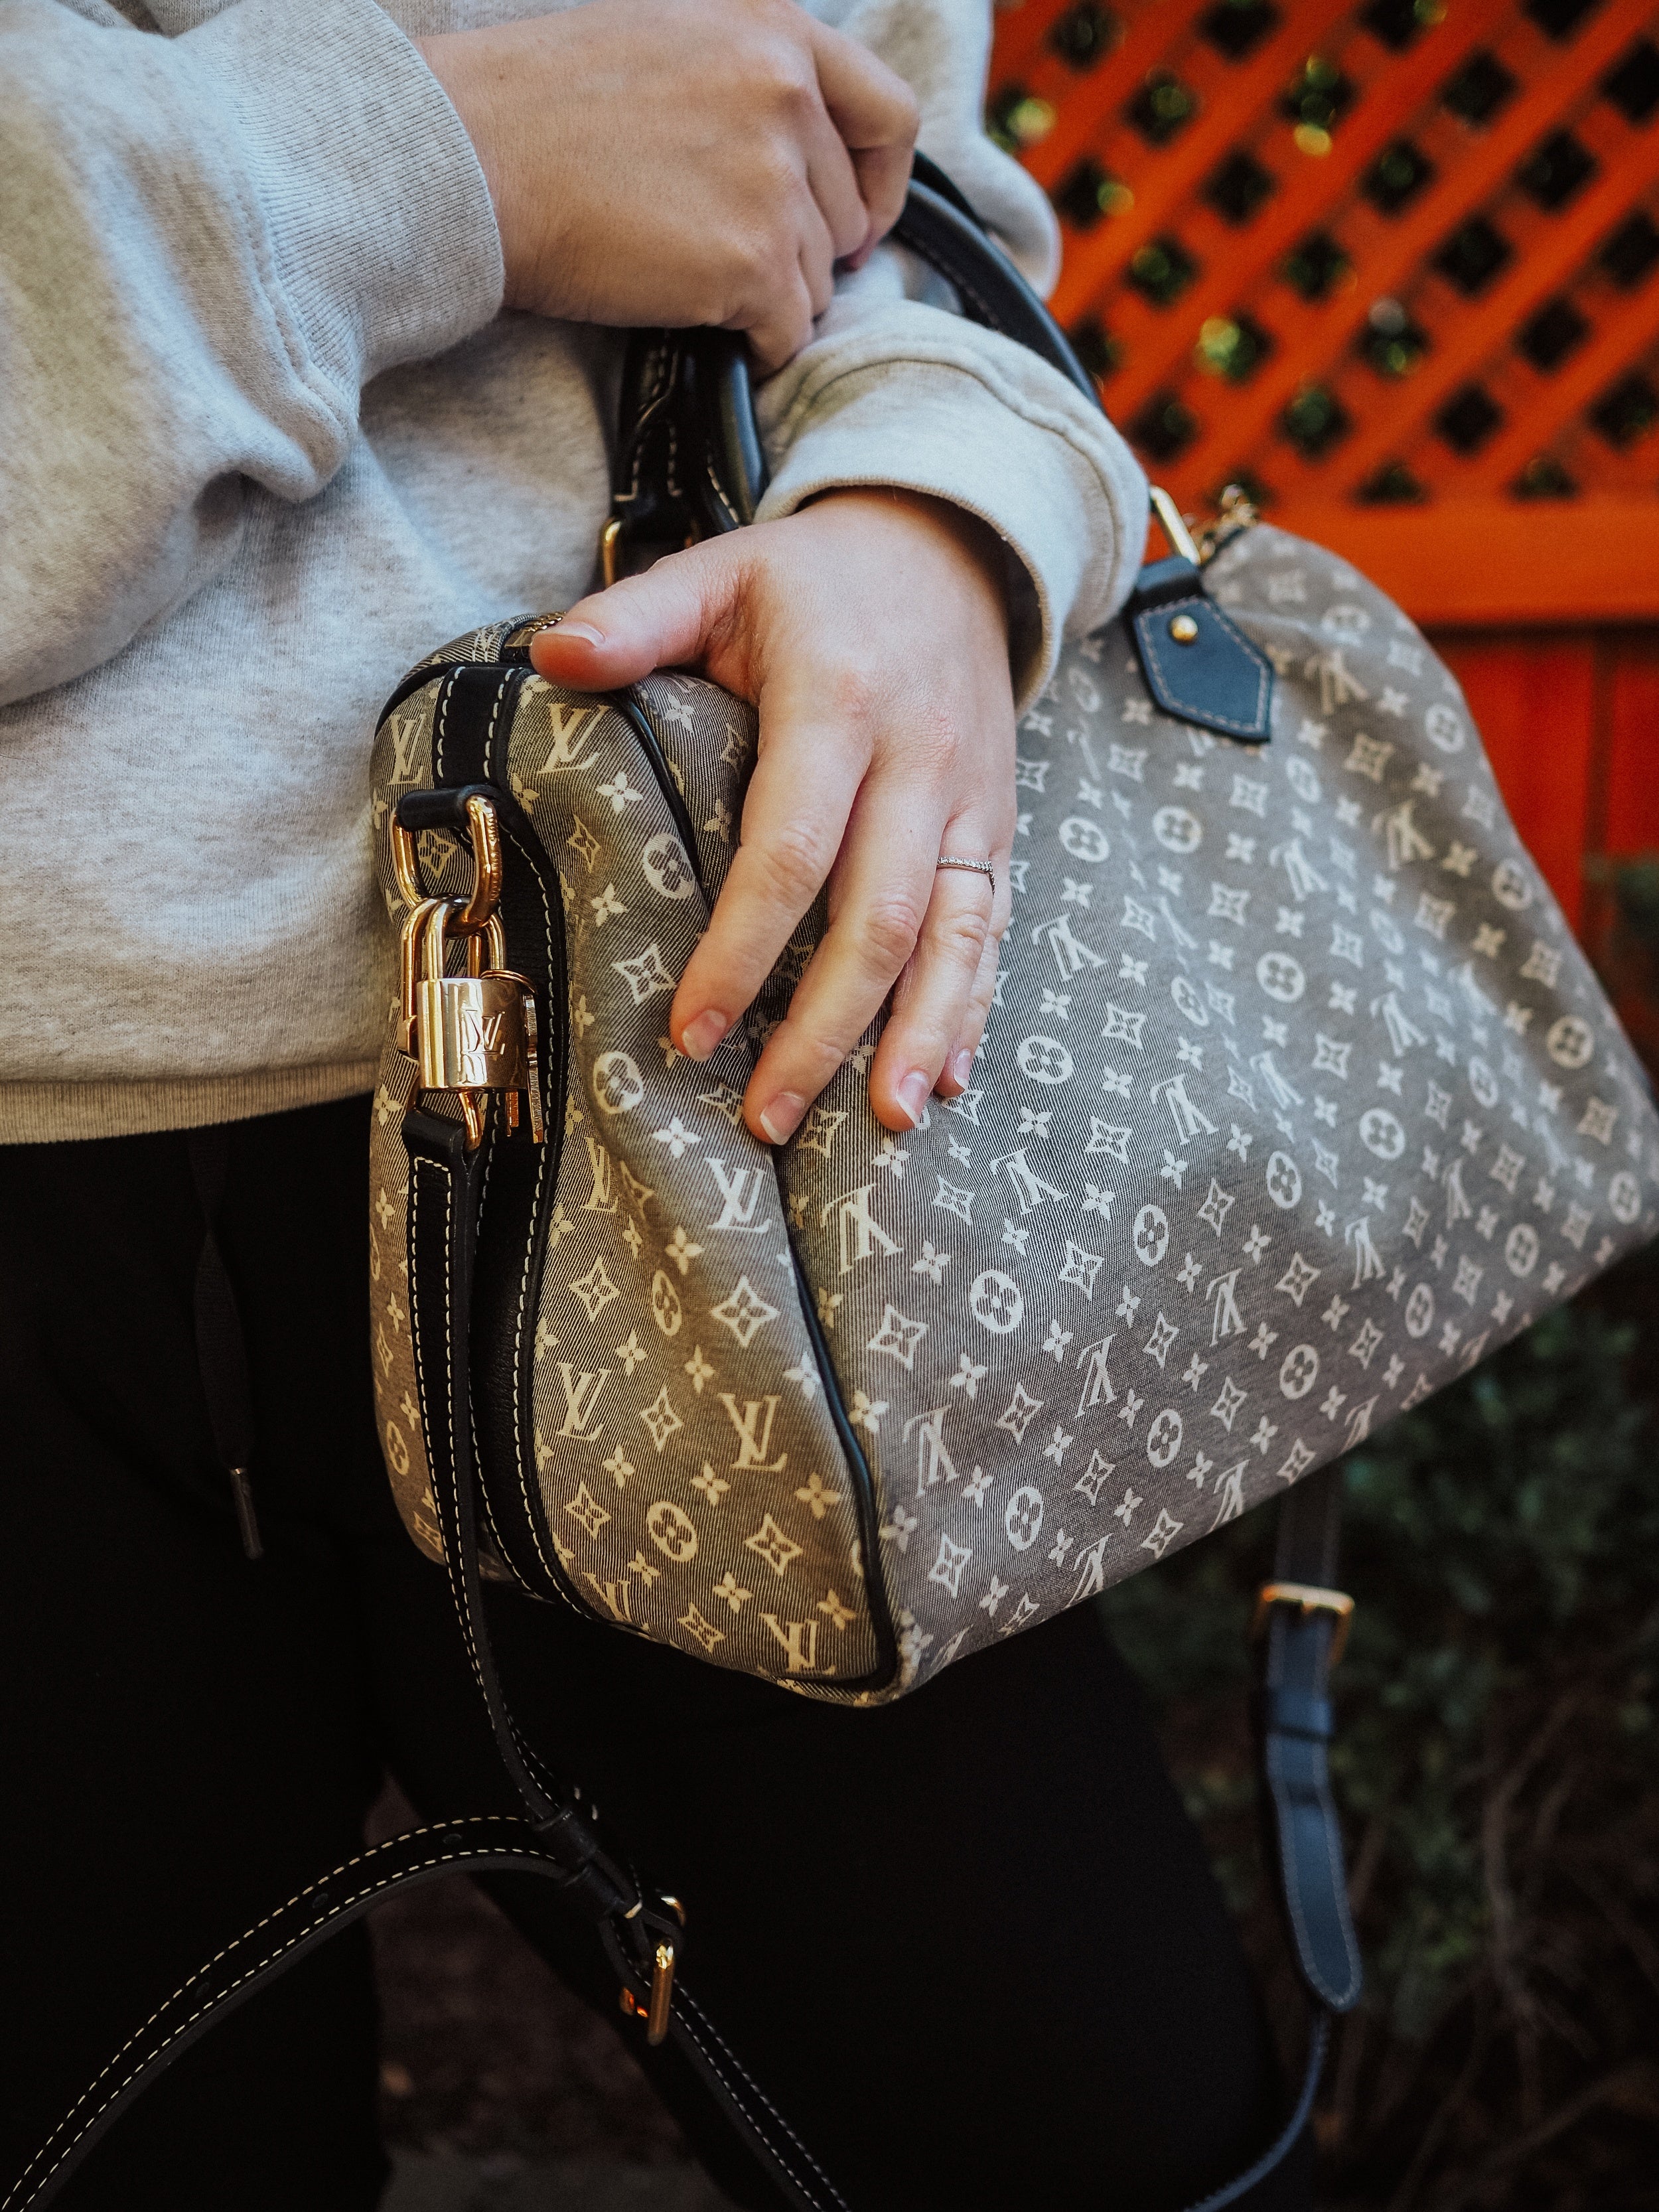 Most Affordable Louis Vuitton Handbags